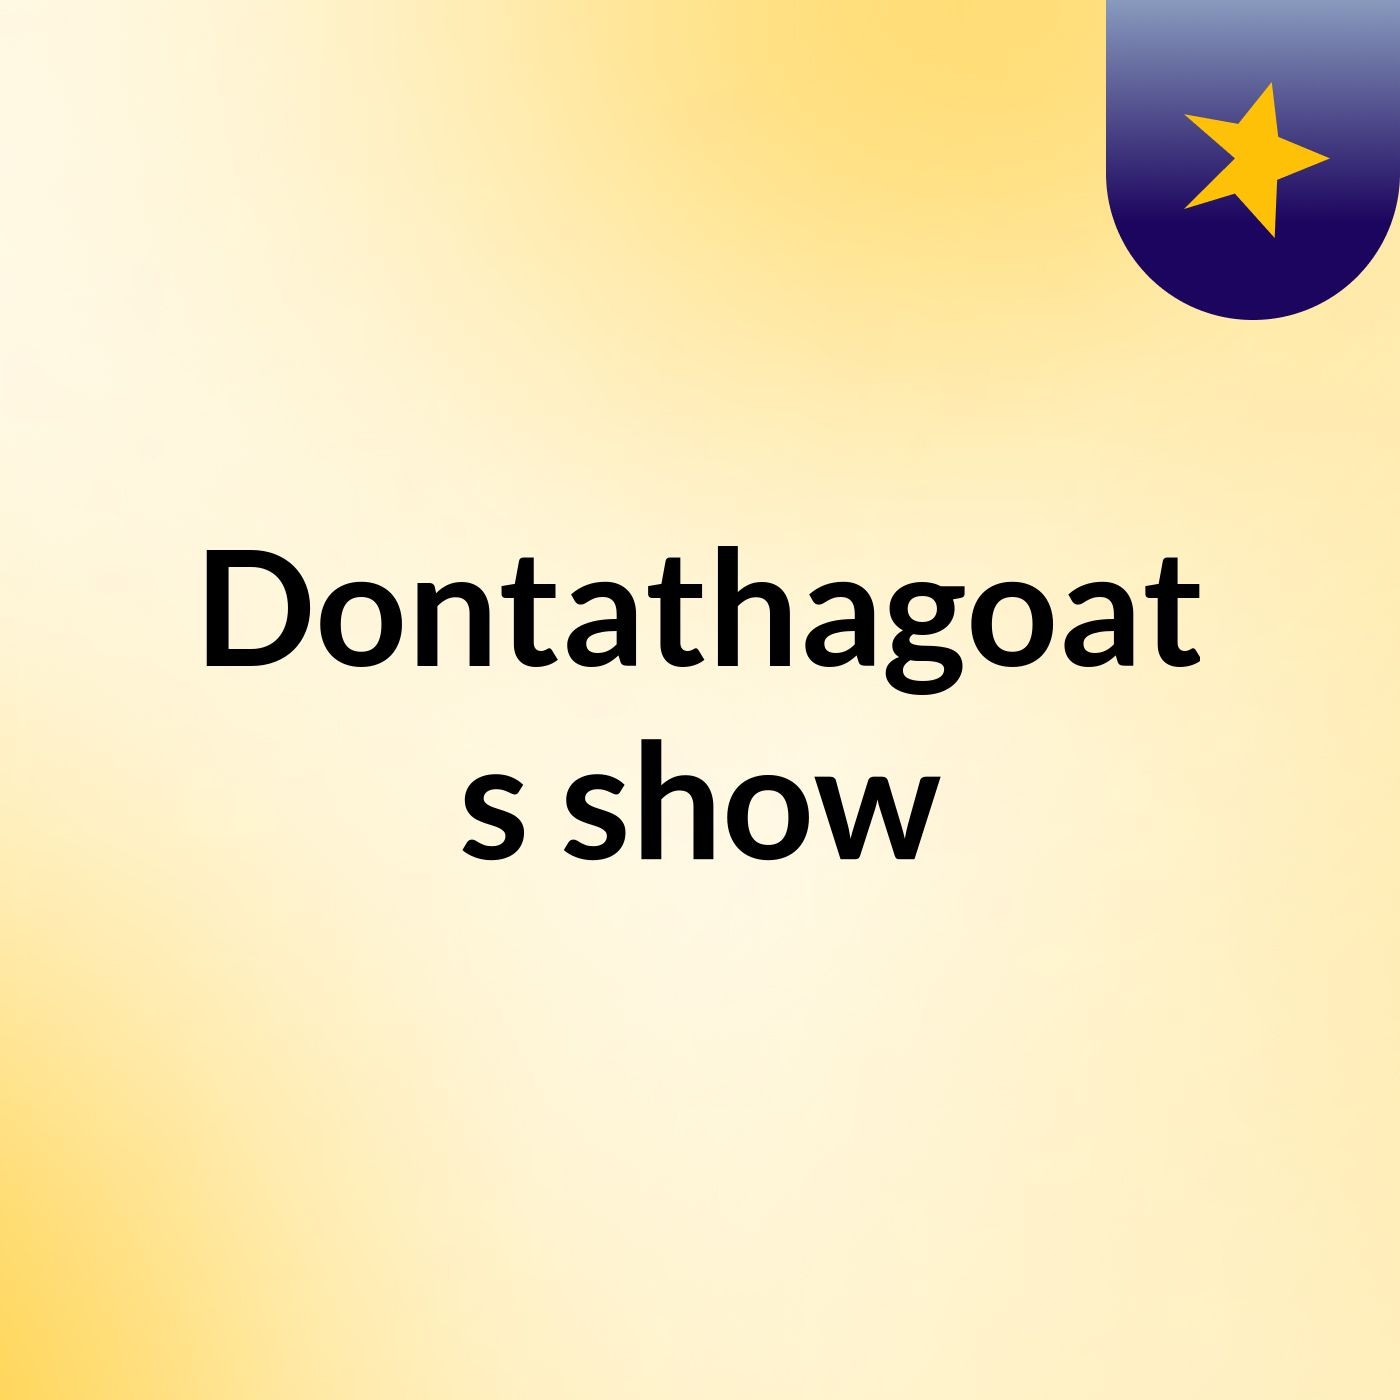 Dontathagoat's show